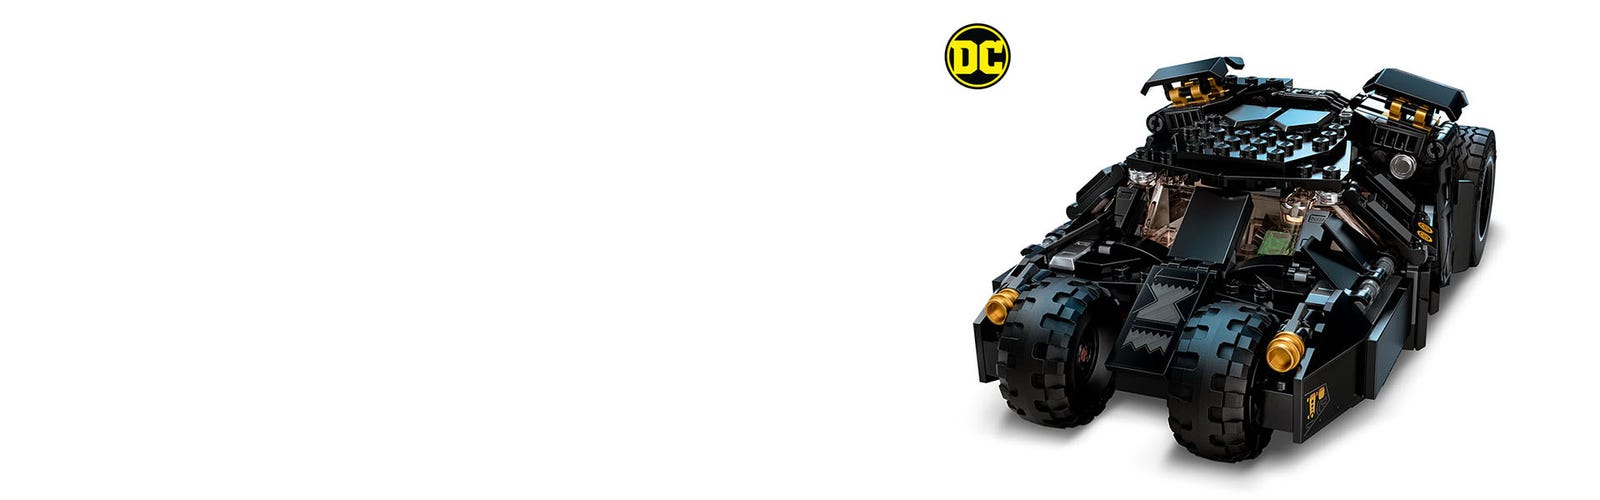  LEGO DC Batman Batmobile Tumbler: Scarecrow Showdown 76239 (422  Pieces) : Toys & Games